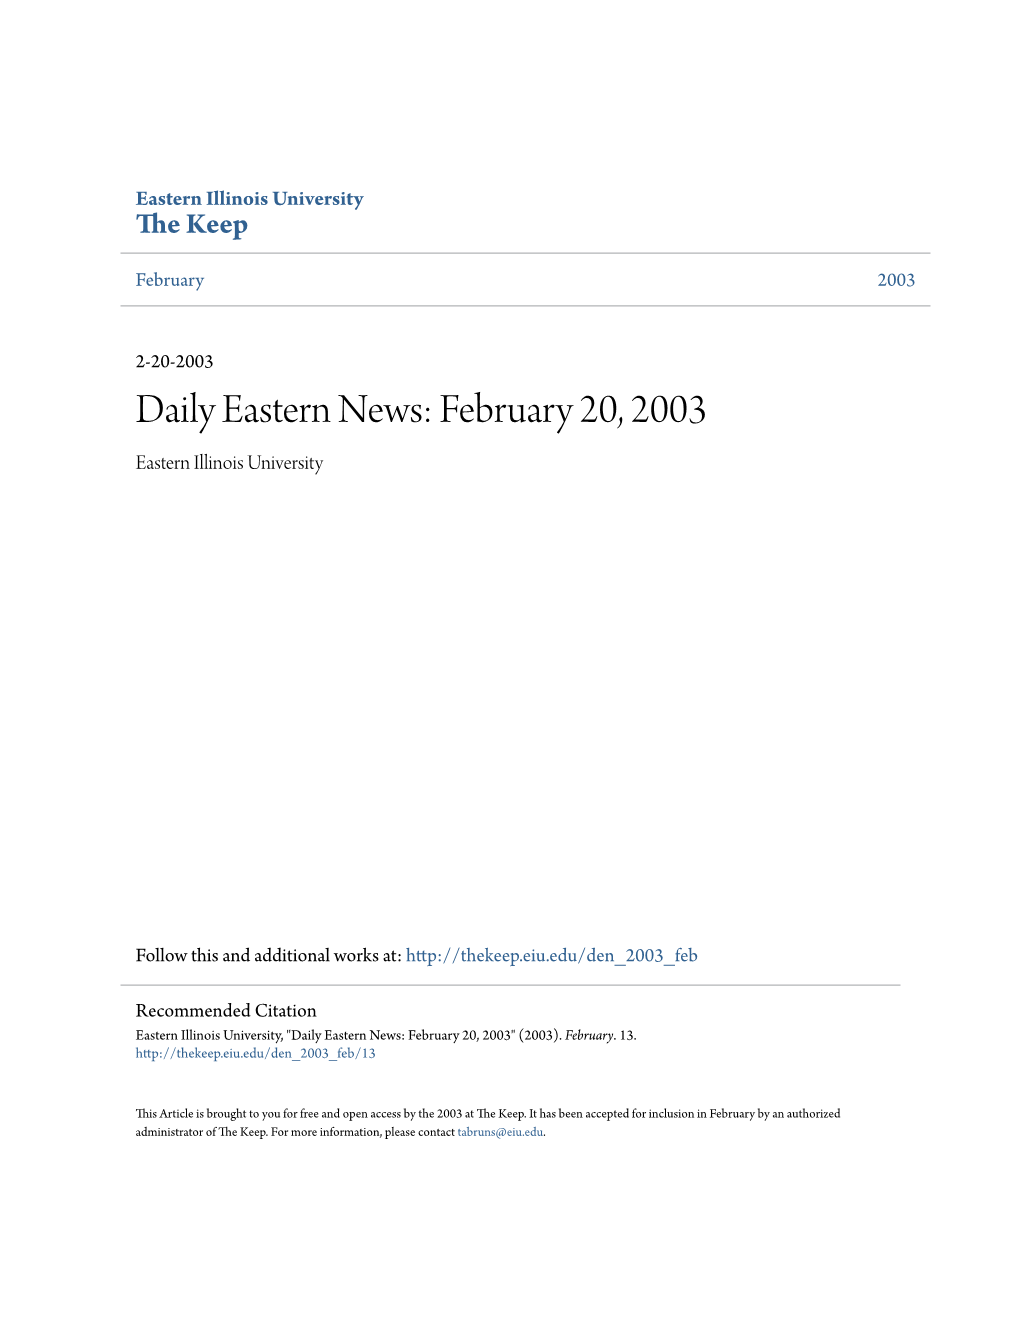 Daily Eastern News: February 20, 2003 Eastern Illinois University